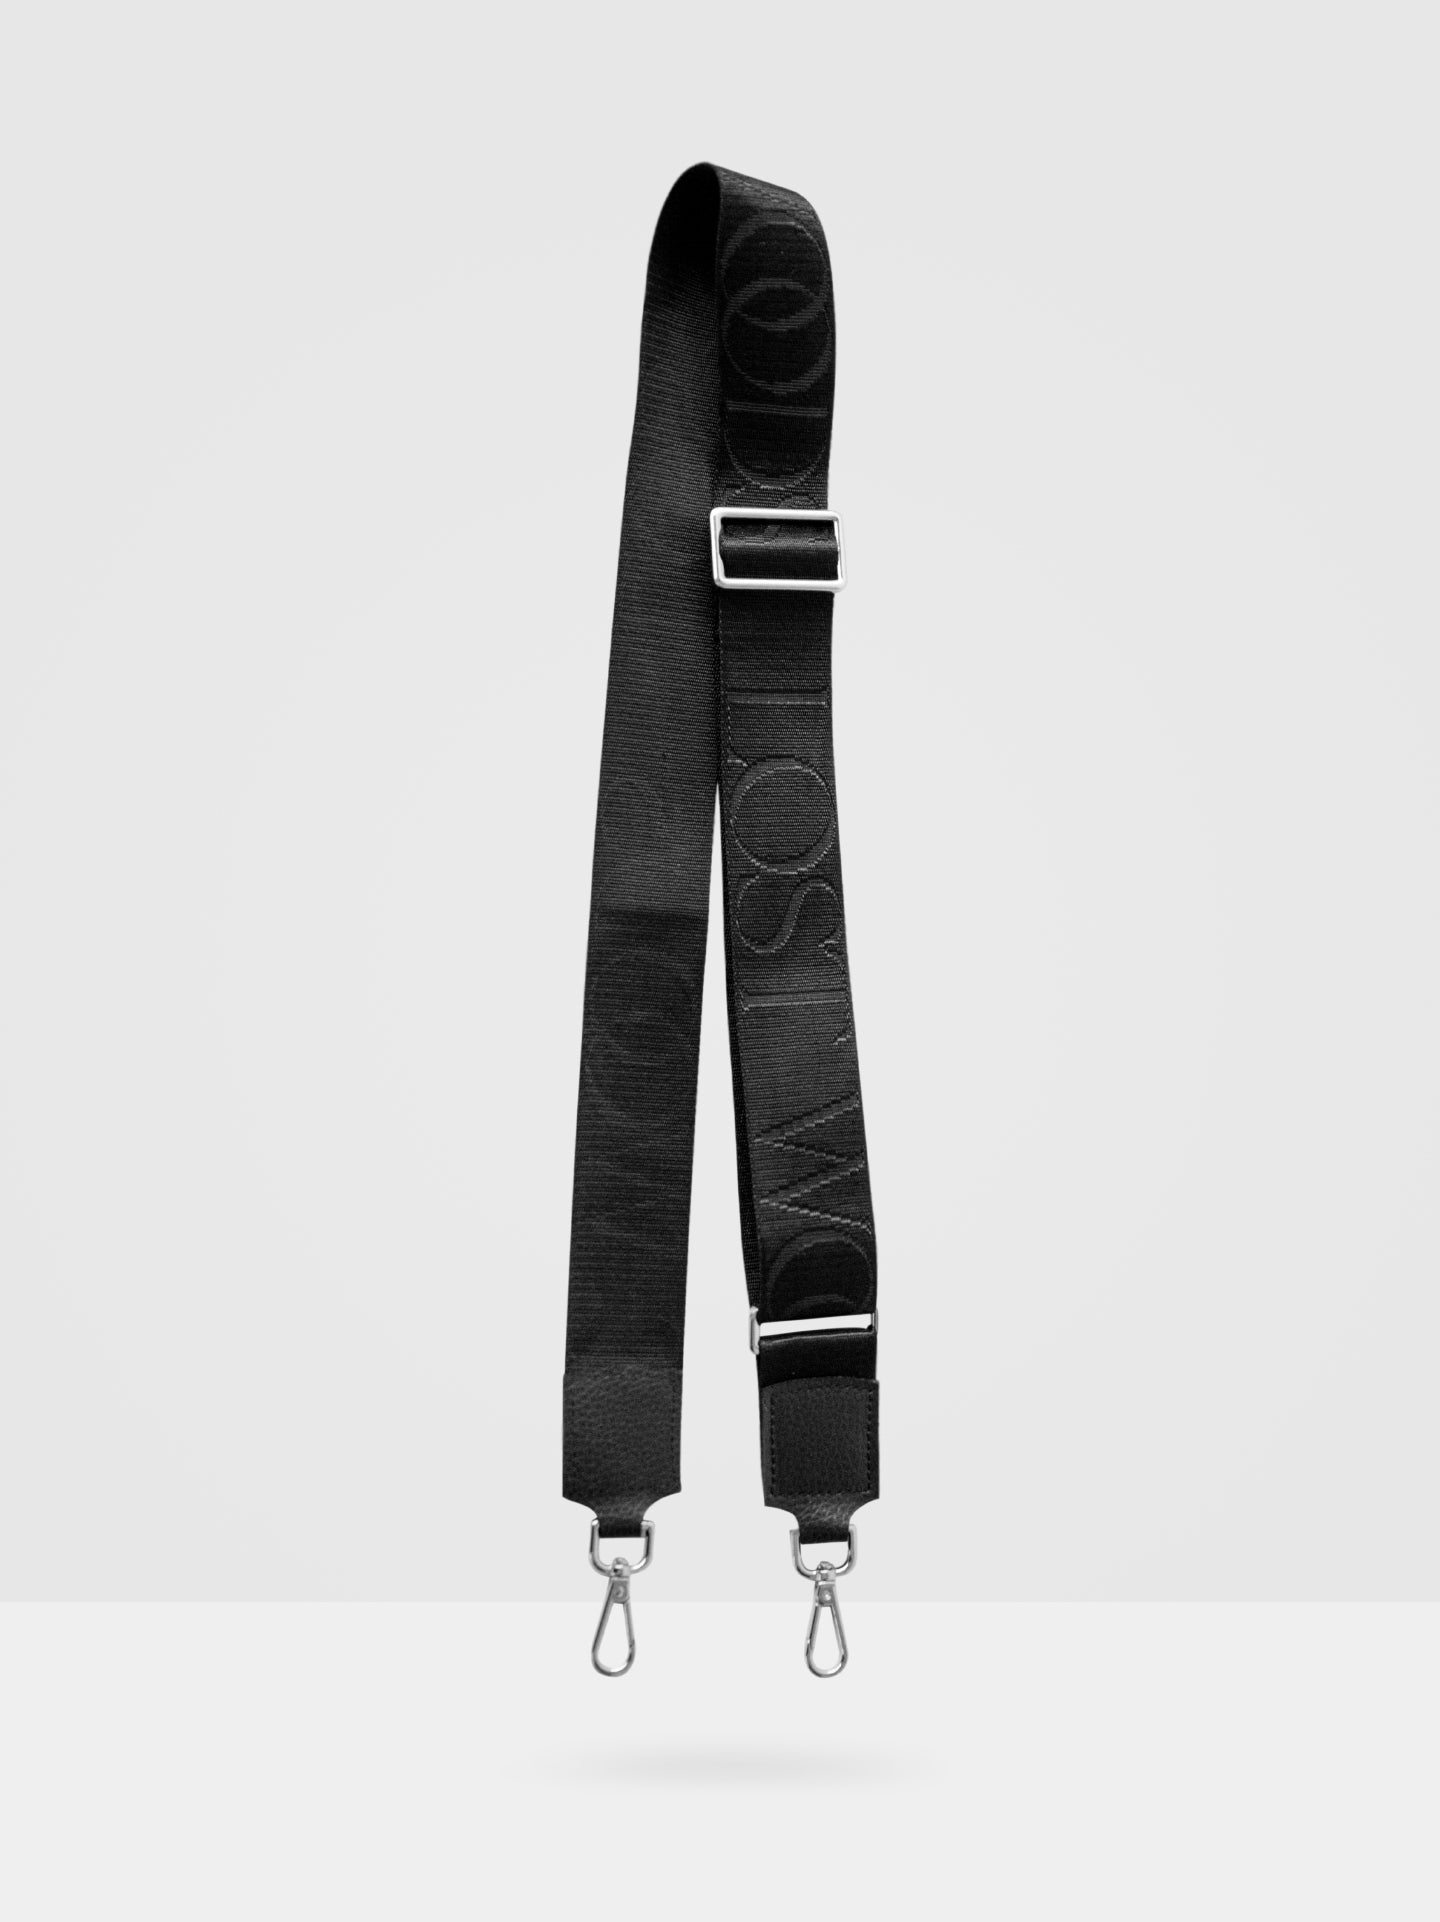 Thick Crossbody Bag Strap in Black & Silver